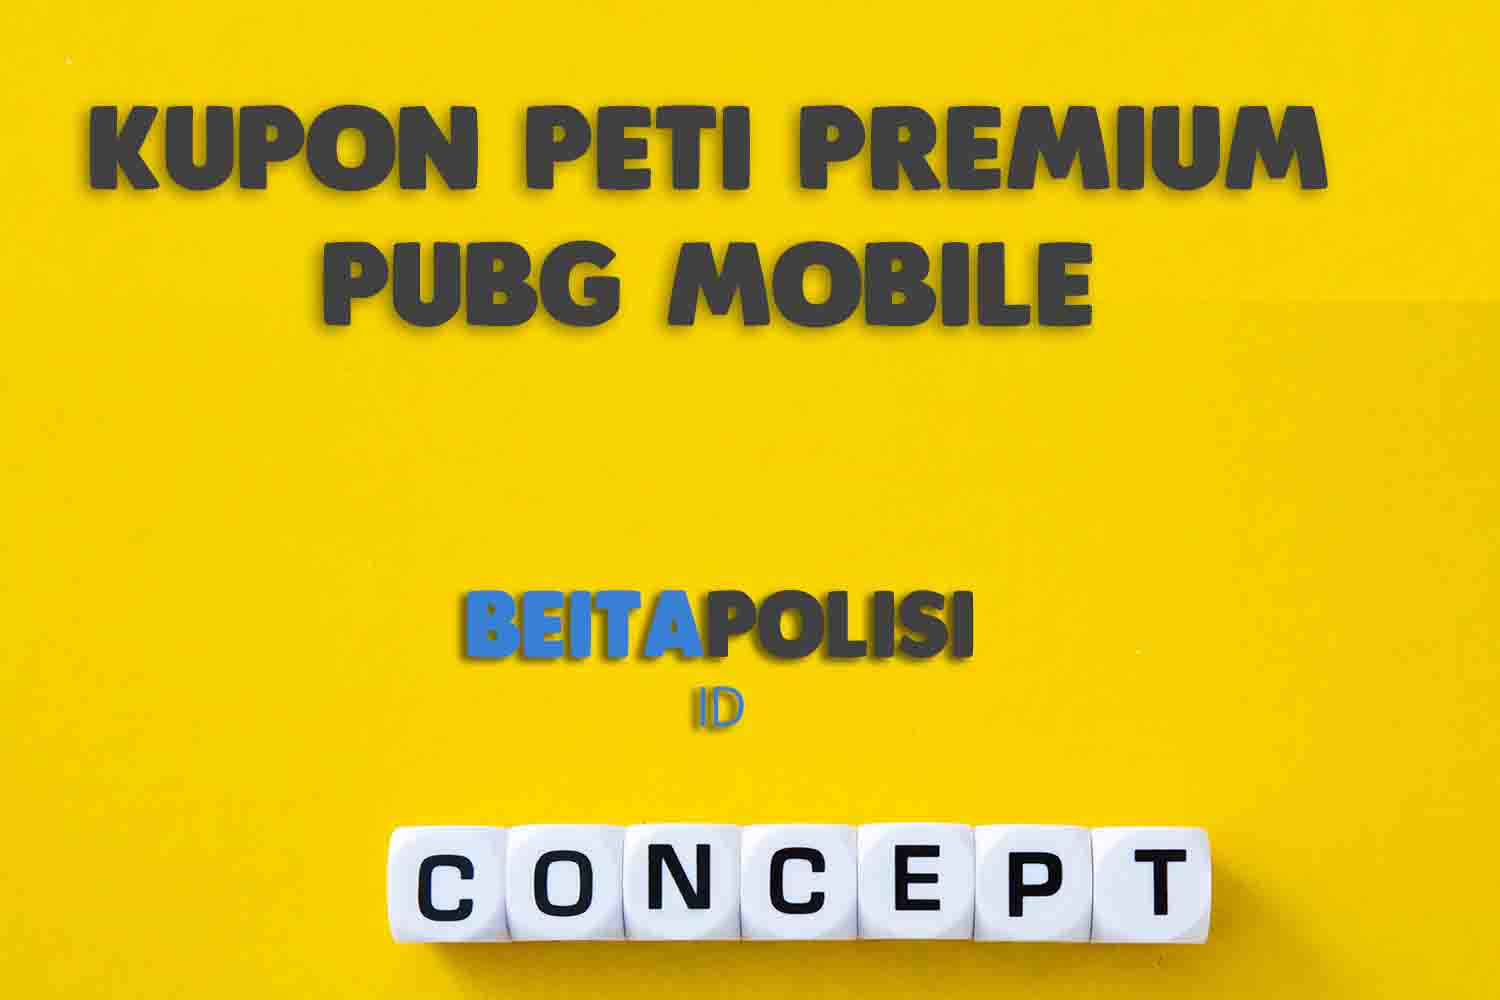 Kupon Peti Premium Pubg Mobile